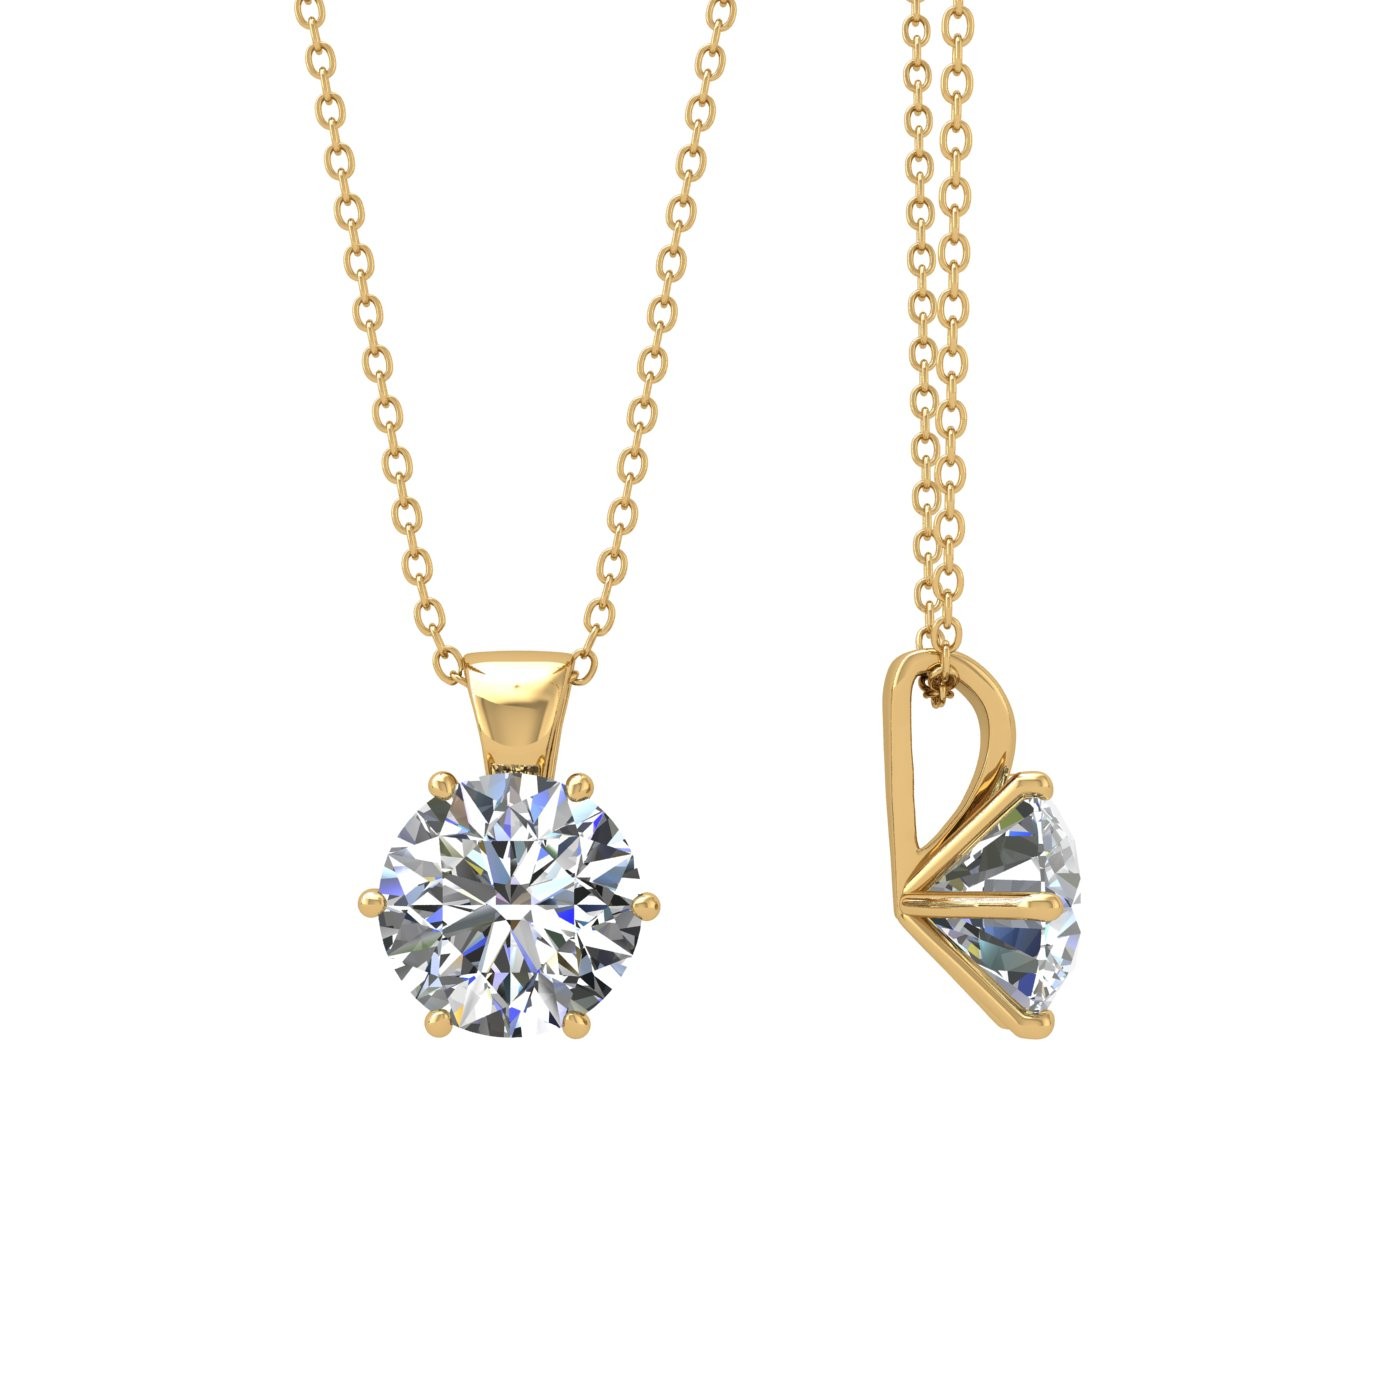 18k rose gold 1.2 ct 6 prongs round shape diamond pendant Photos & images